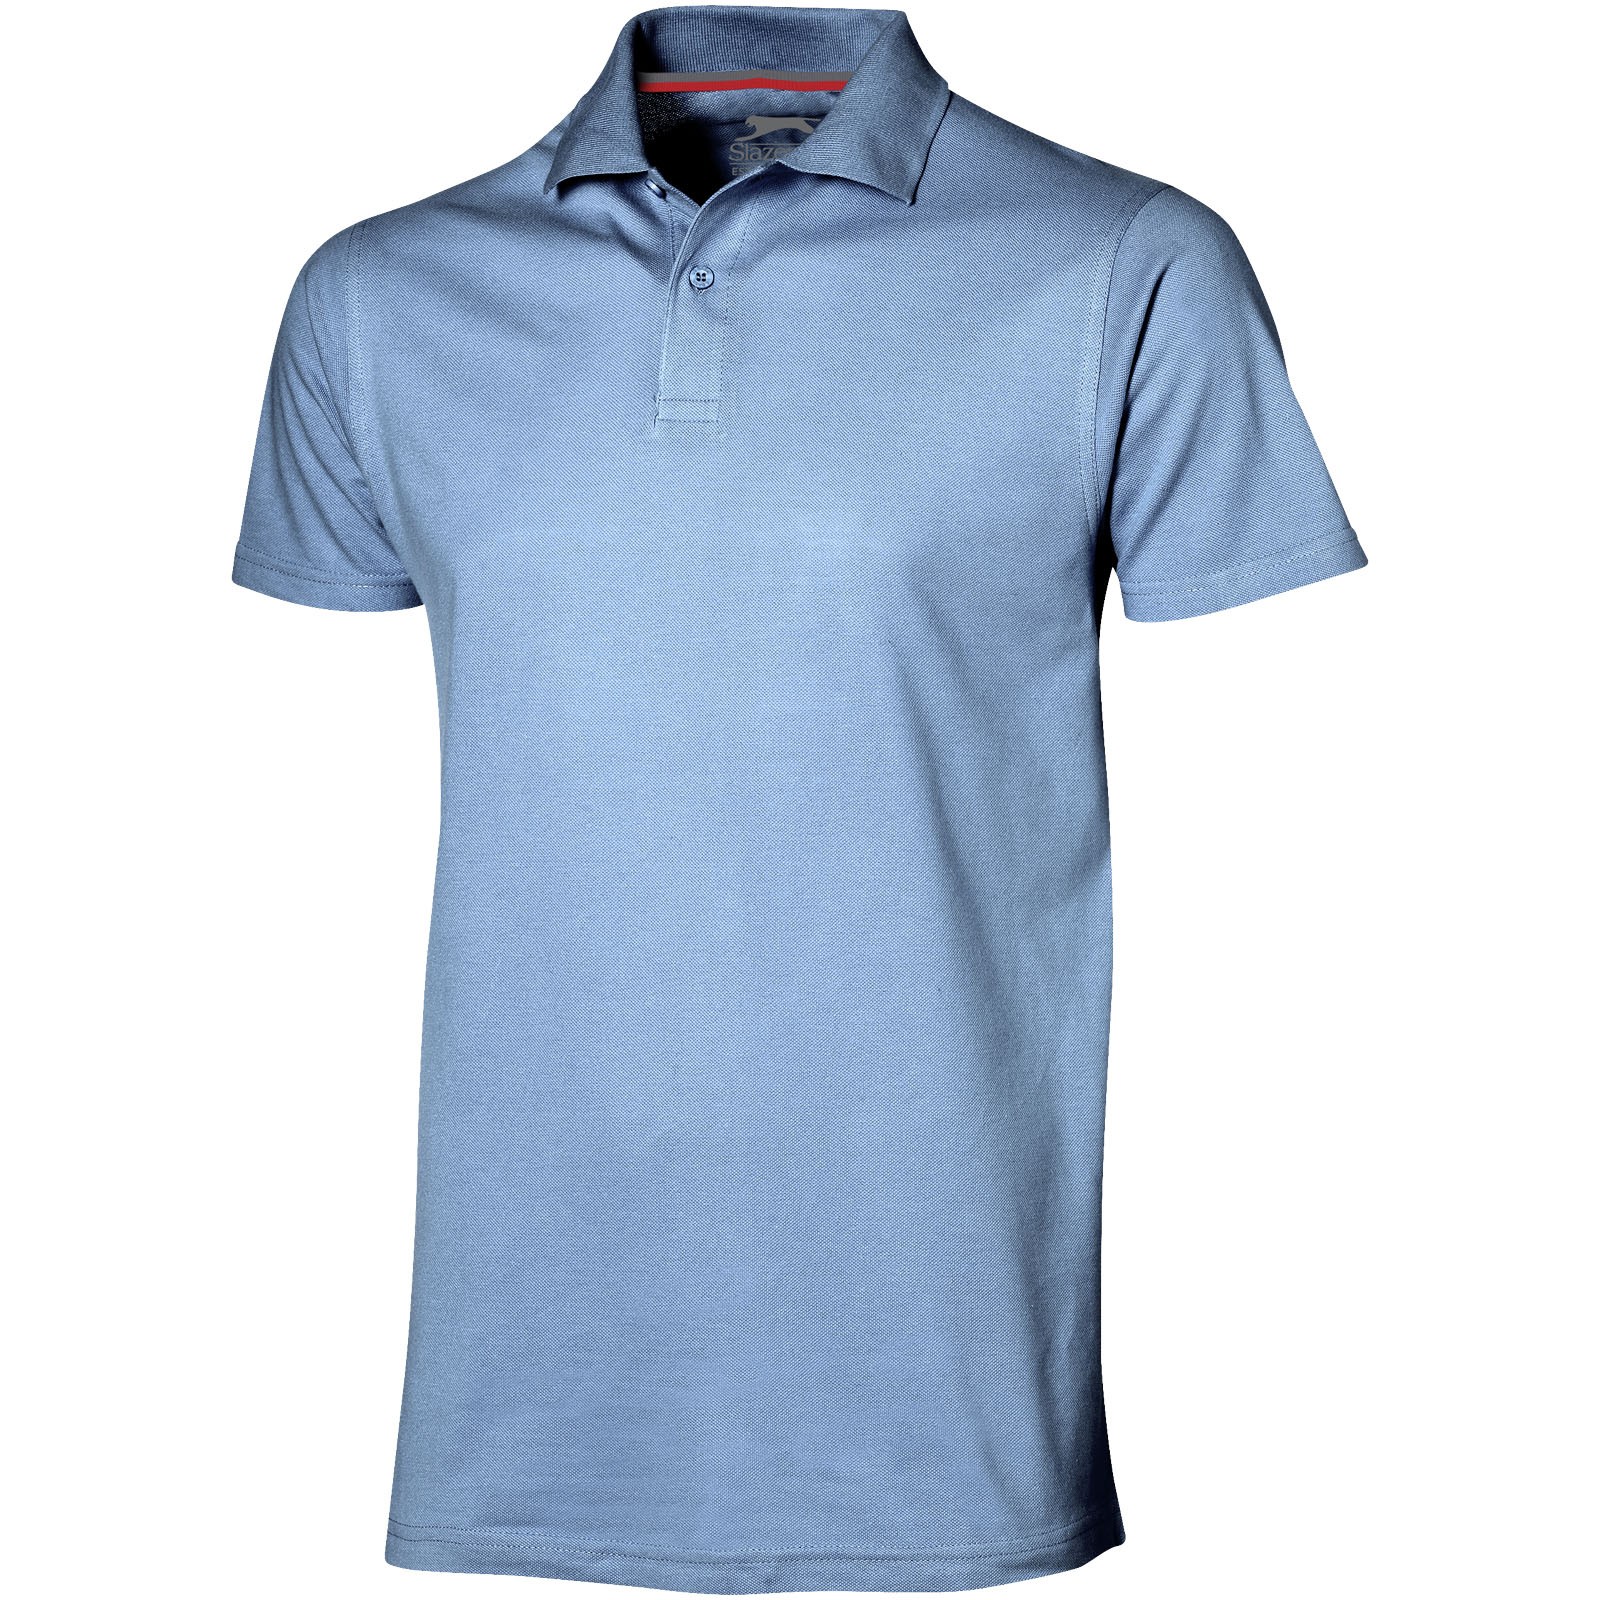 Advantage short sleeve men's polo - Light Blue / M